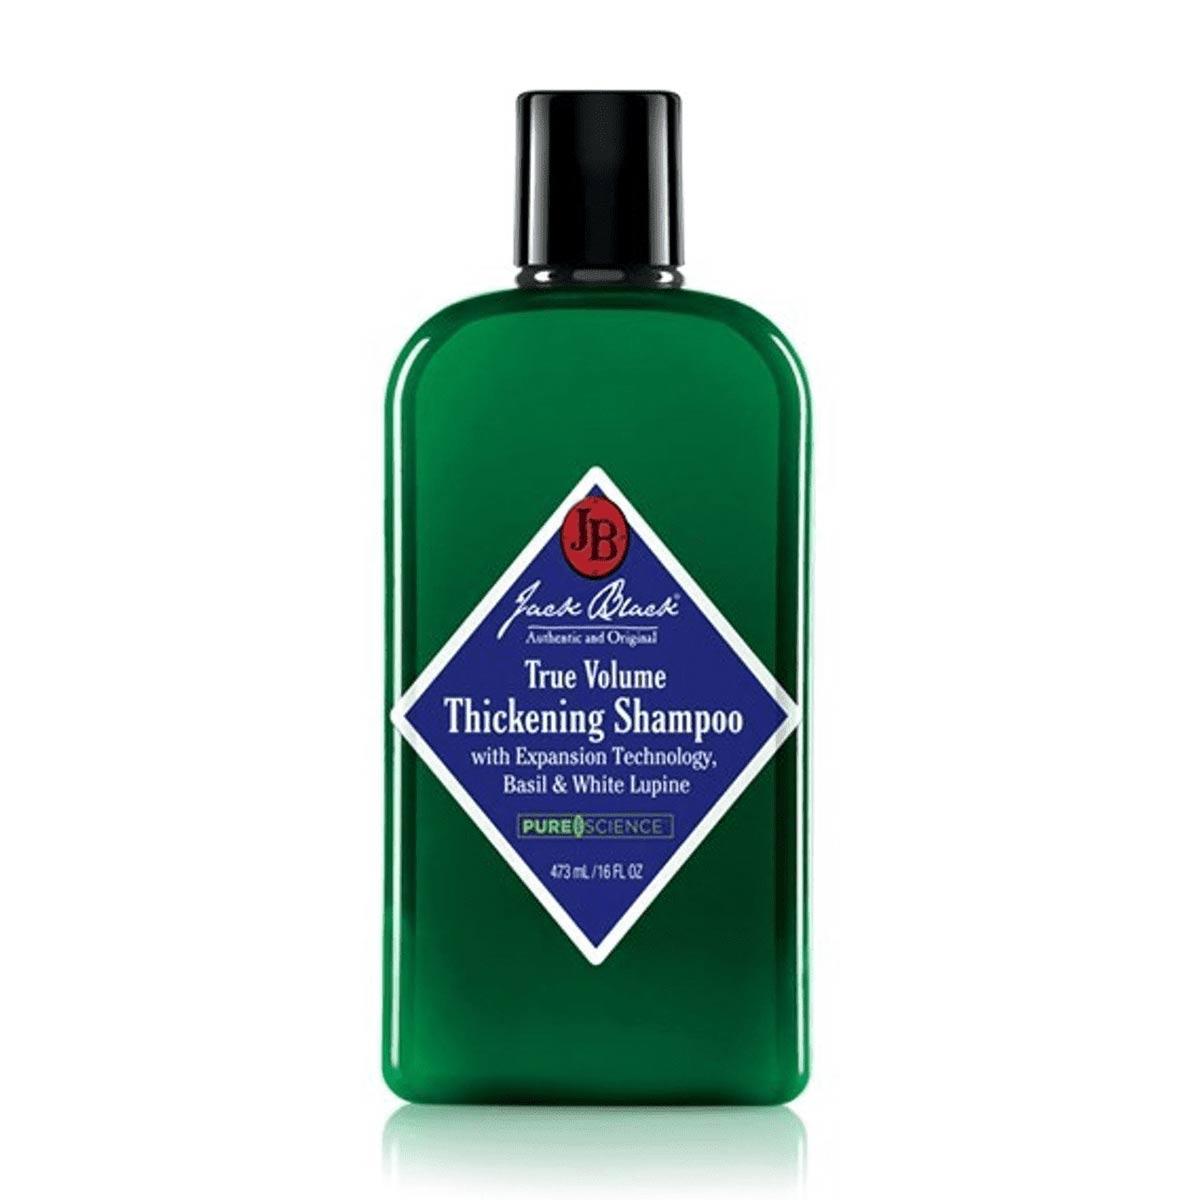 Primary image of True Volume Thickening Shampoo